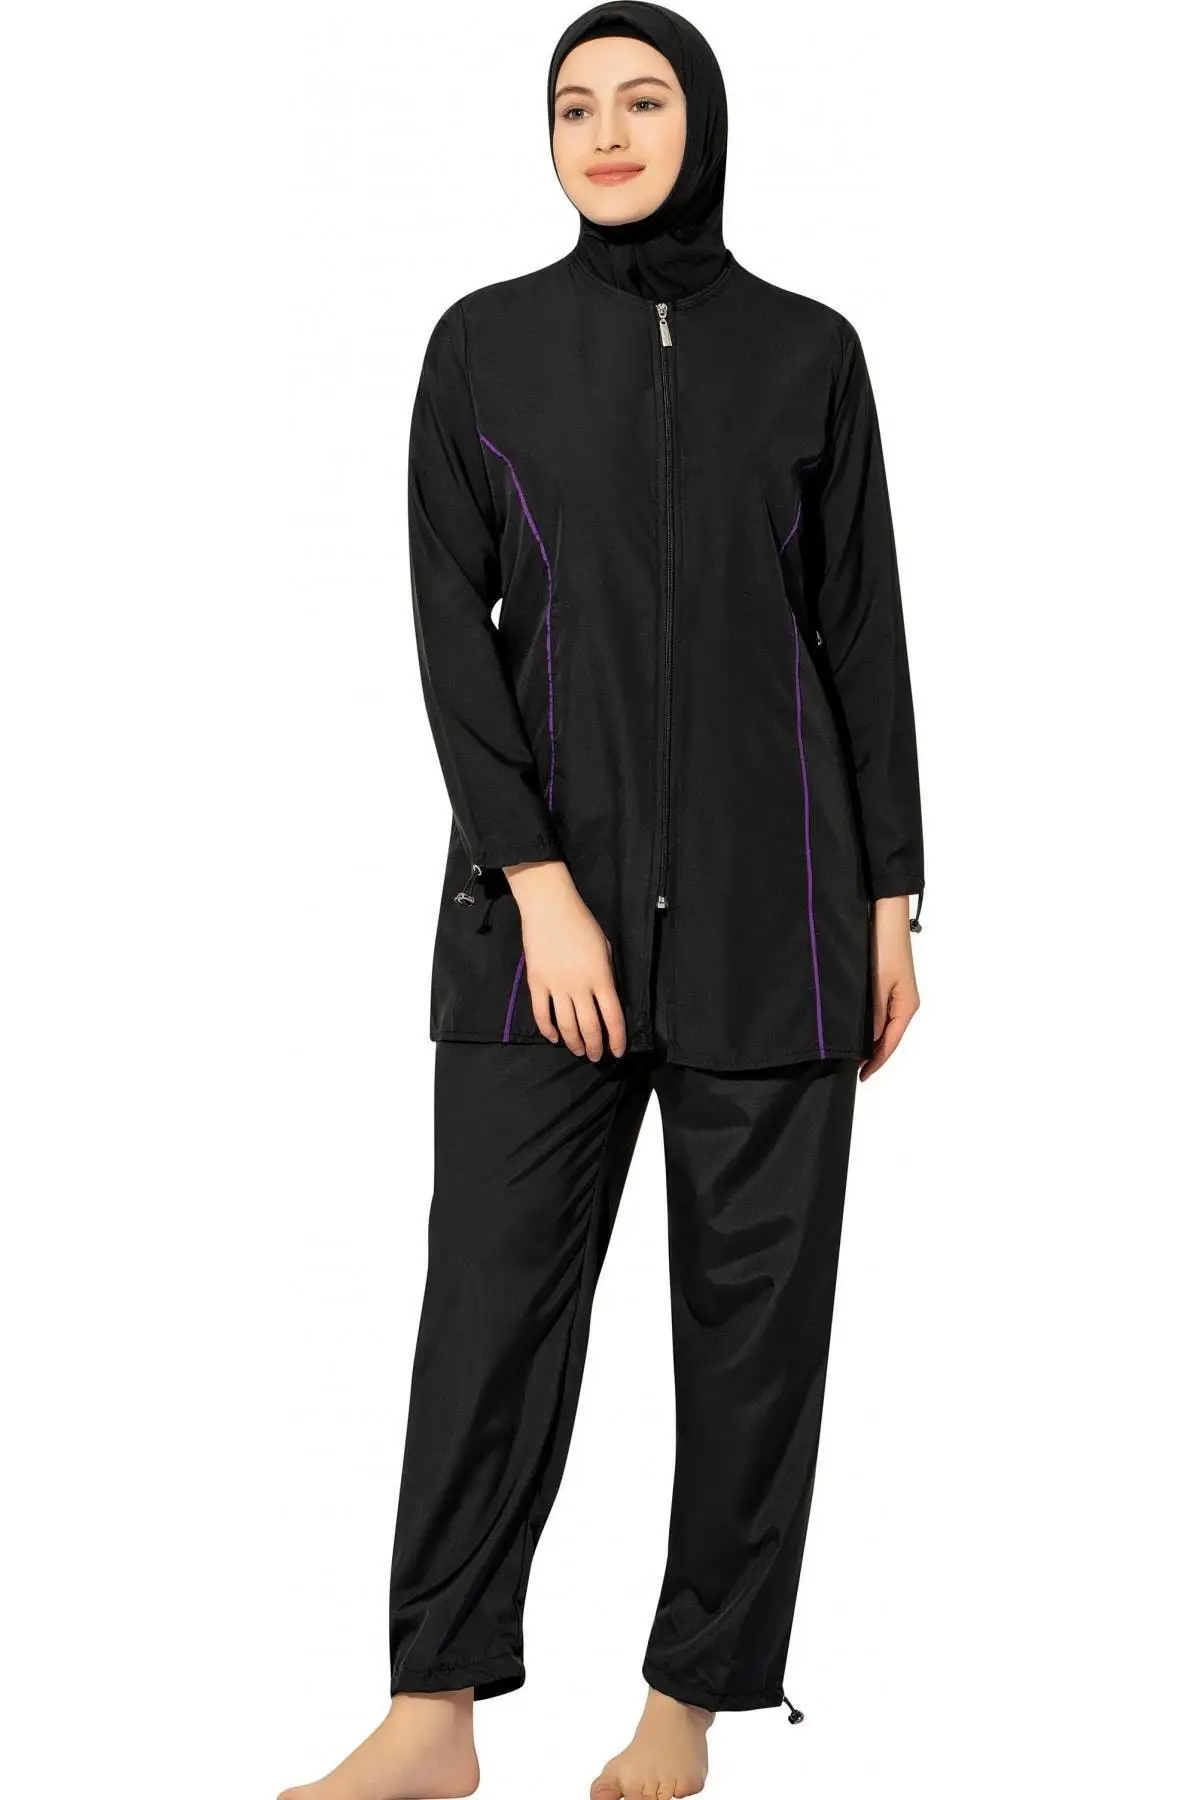 Long Sleeve Solid Plain Full Hijab Swimwear 7102 Black Large Size Beach Clothing